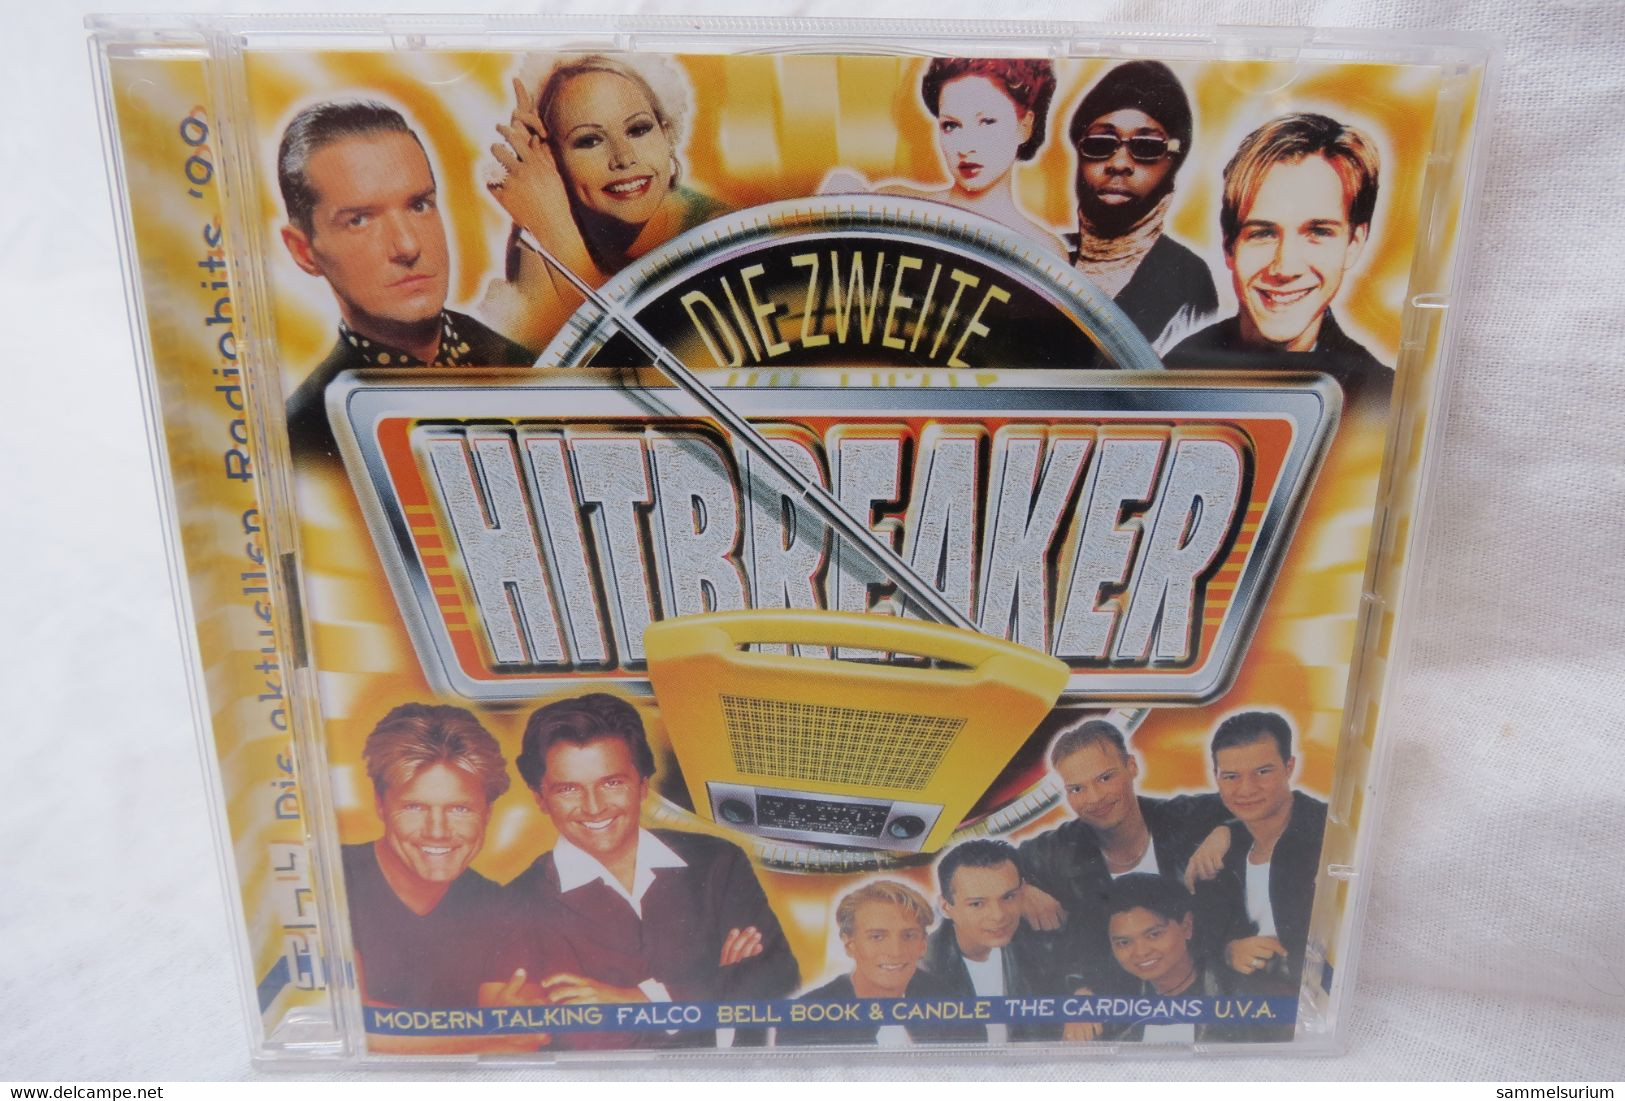 2 CDs "Die Zweite Hitbreaker" Die Aktuellen Radiohits '99 - Compilations